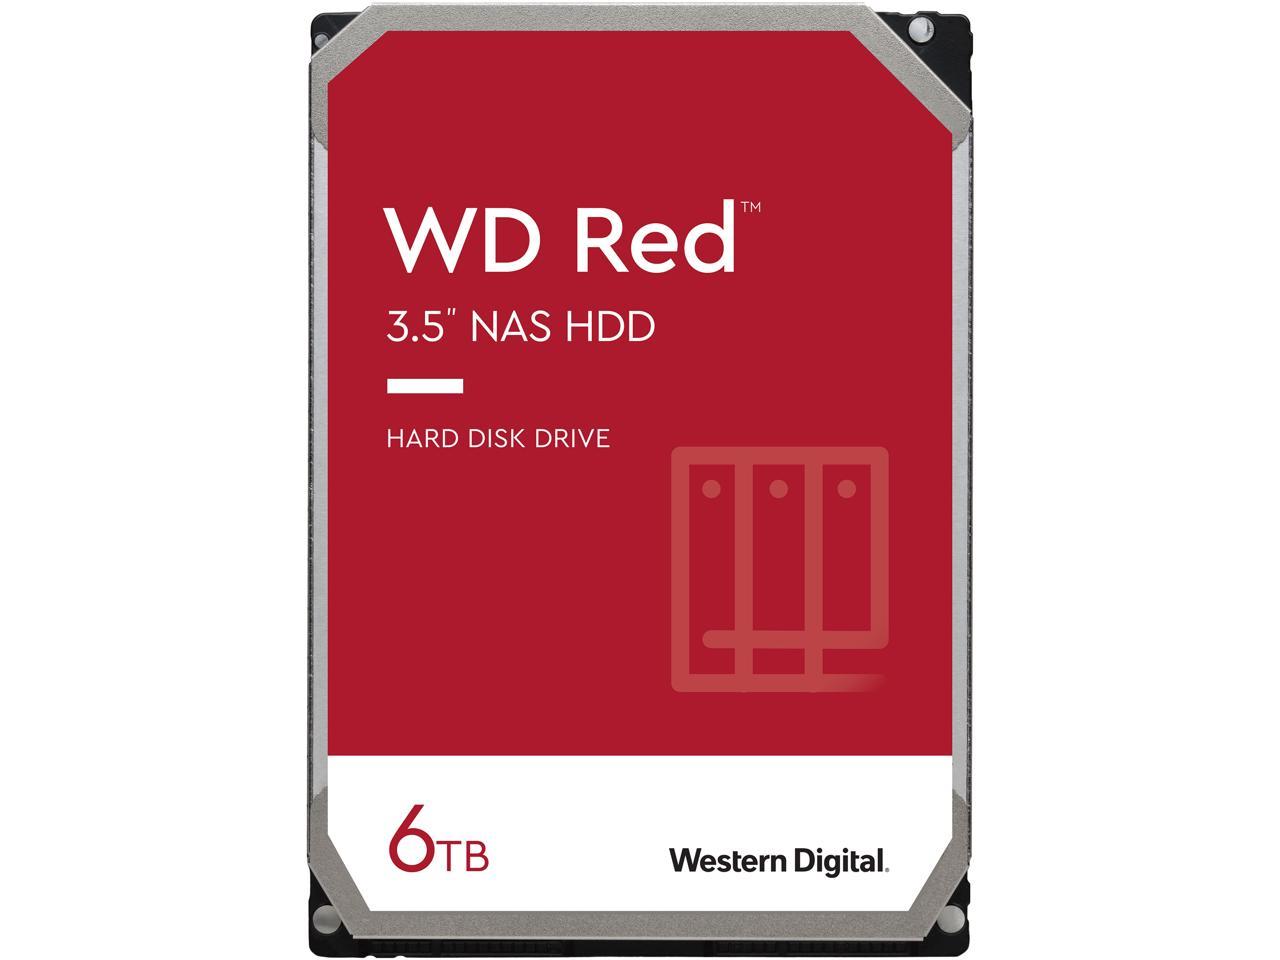 6TB WD Red NAS Hard Drive @Newegg $125